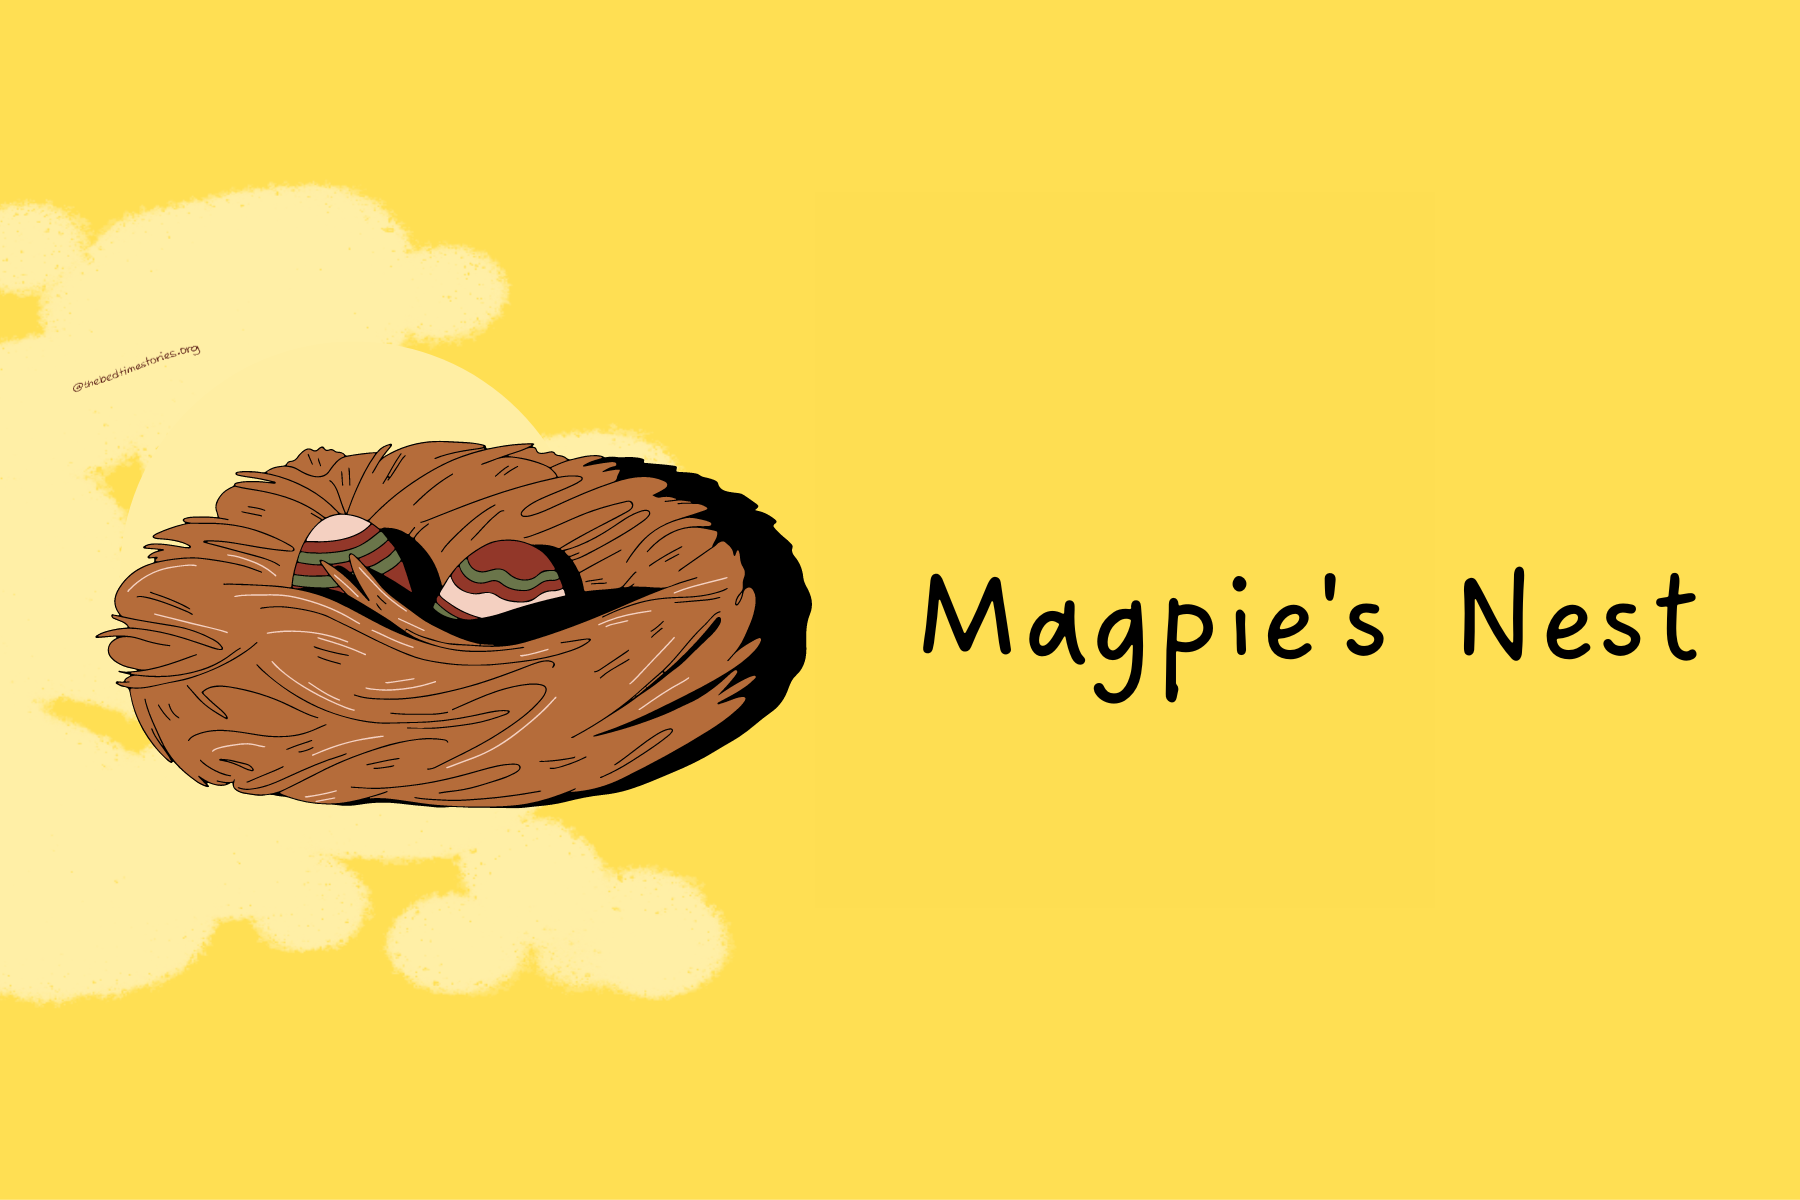 The Magpie’s Nest